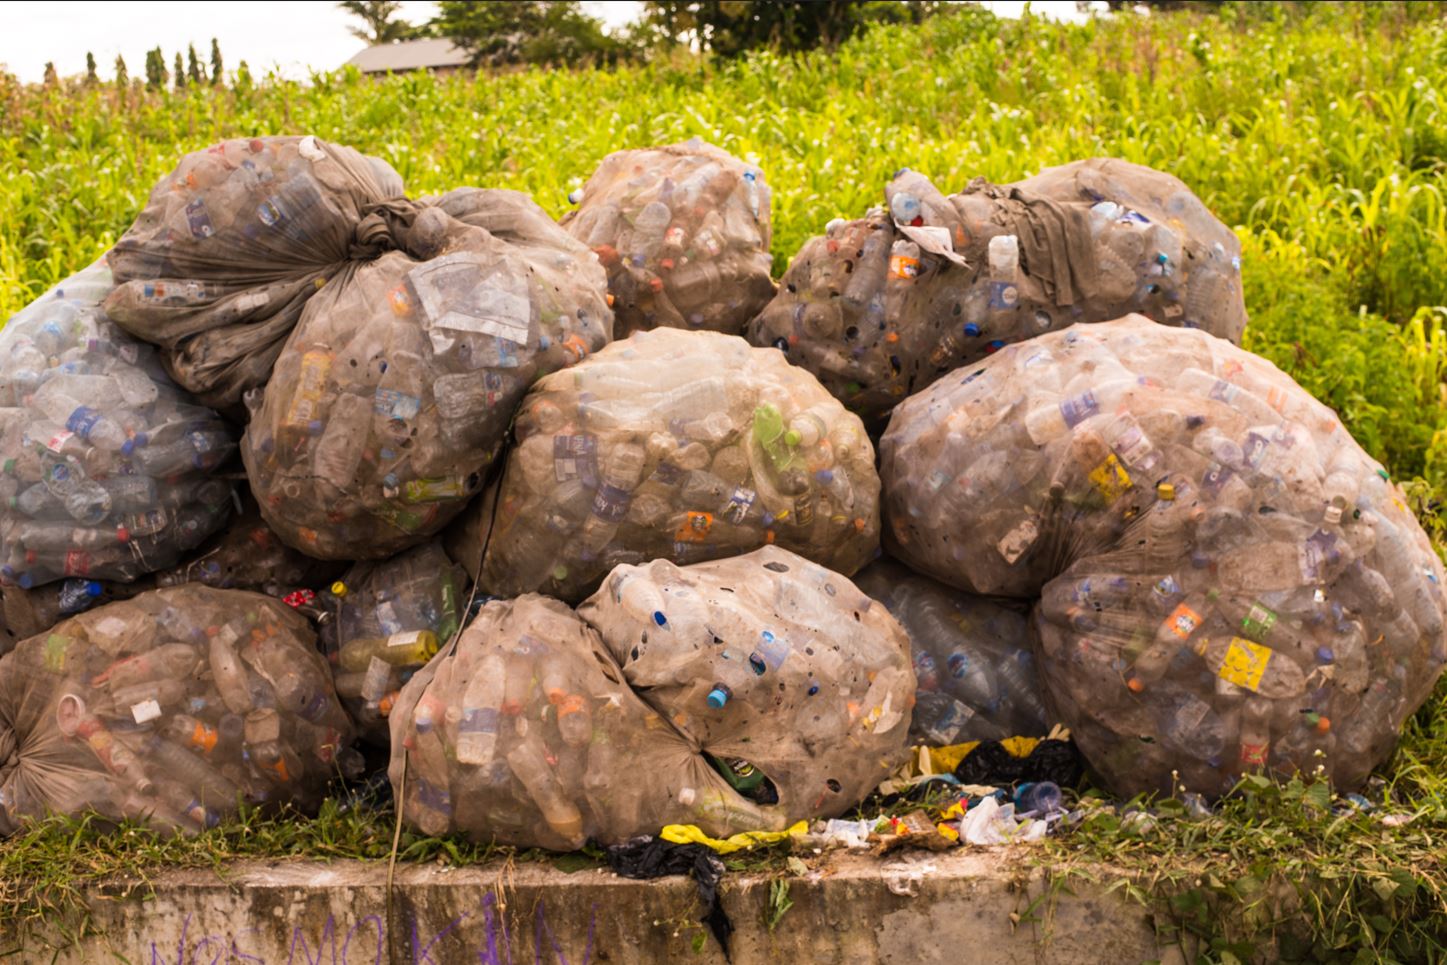 How Abuja residents shift waste into wealth, as economic hardship bites